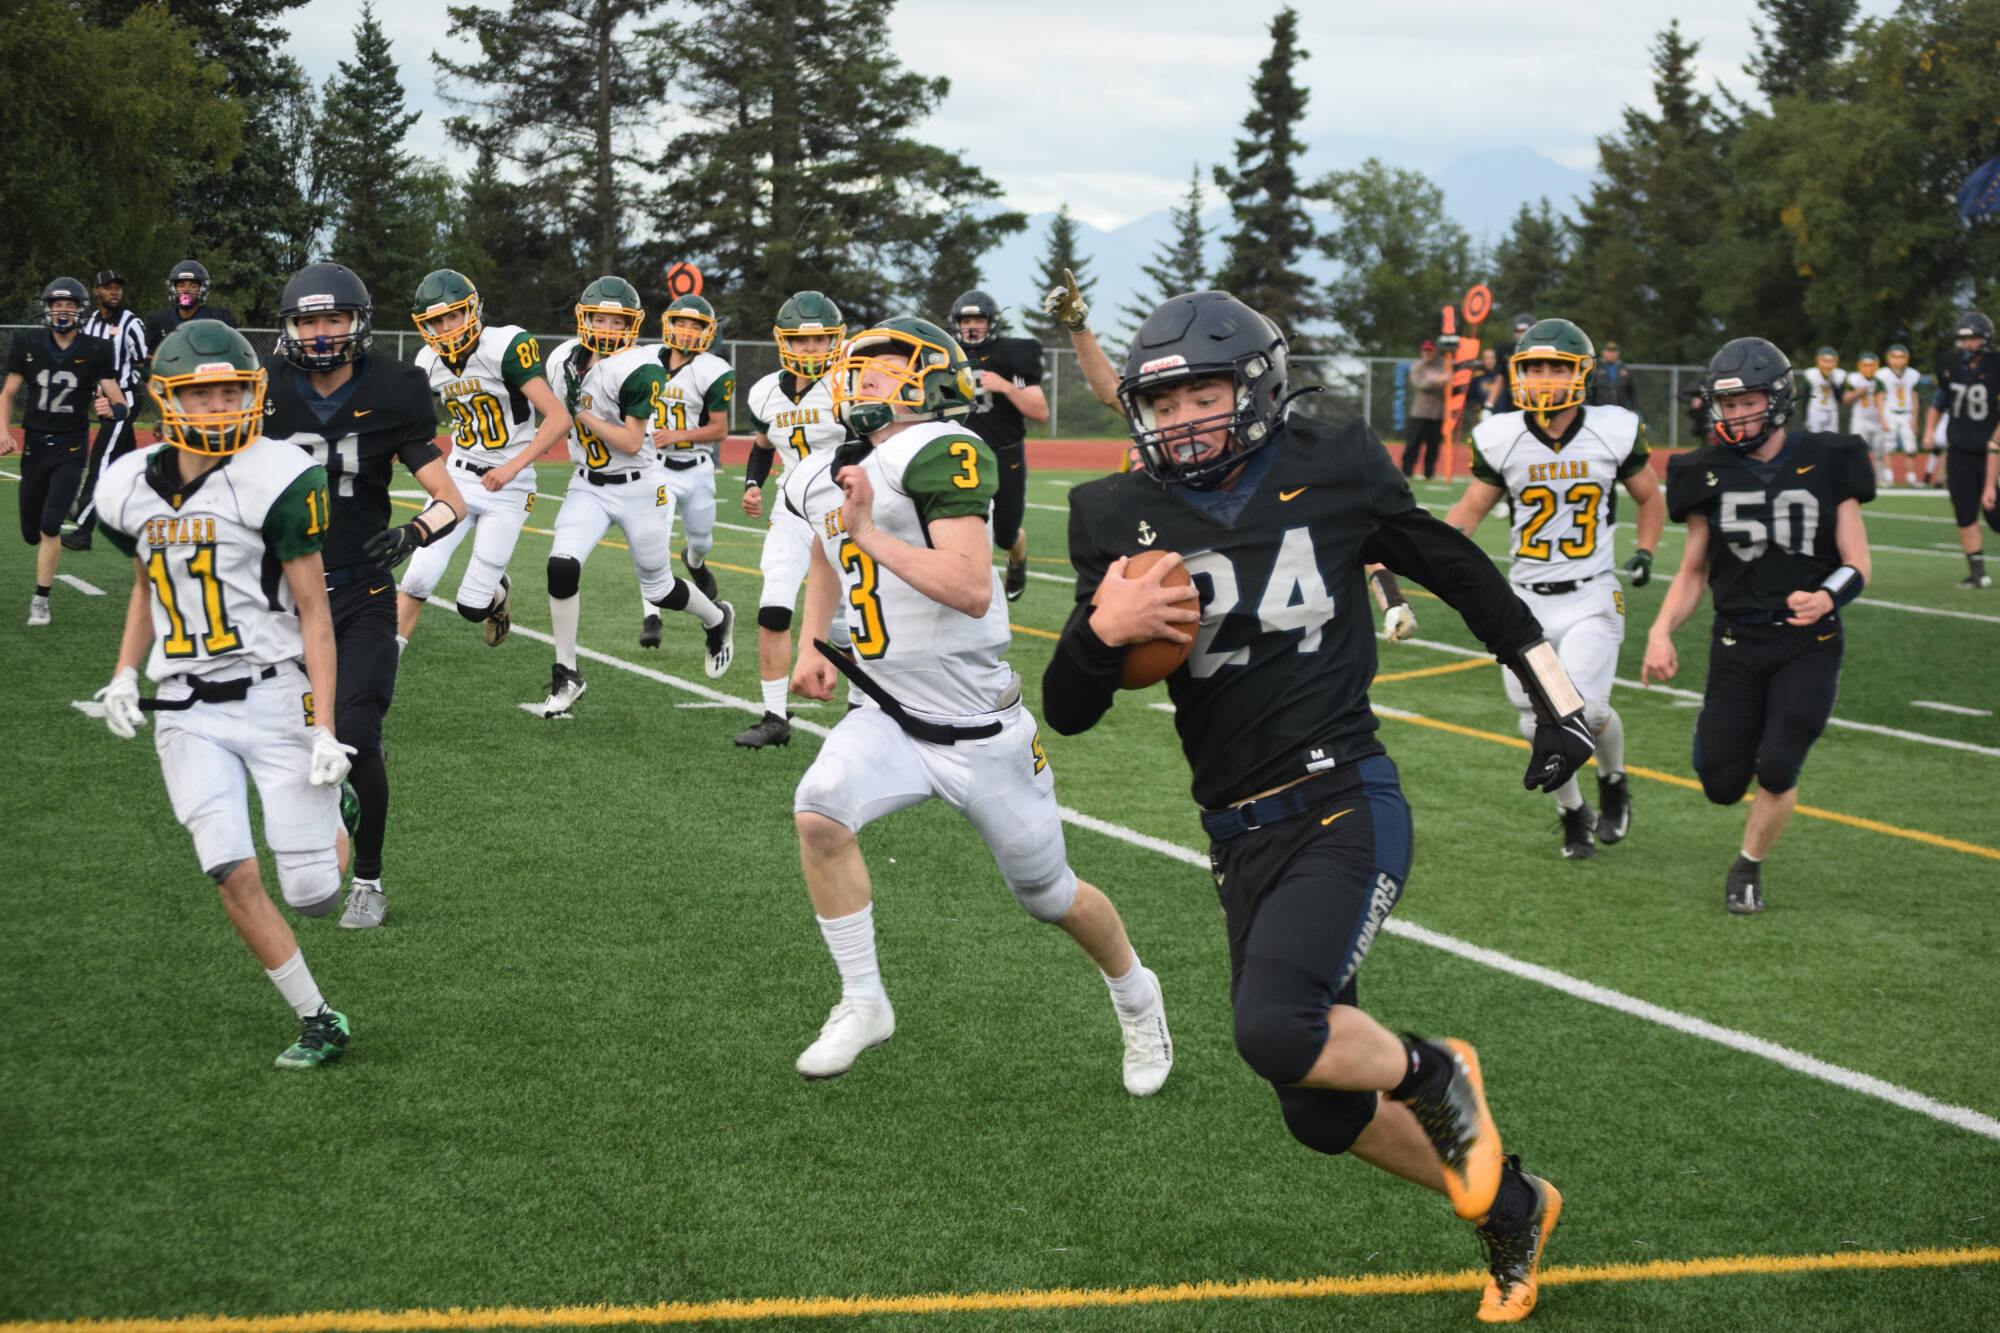 Preston Stanislaw attempts a touchdown rush on Friday, Aug. 26 at Homer High School Field in Homer, Alaska. (Photo by Charlie Menke/Homer News)